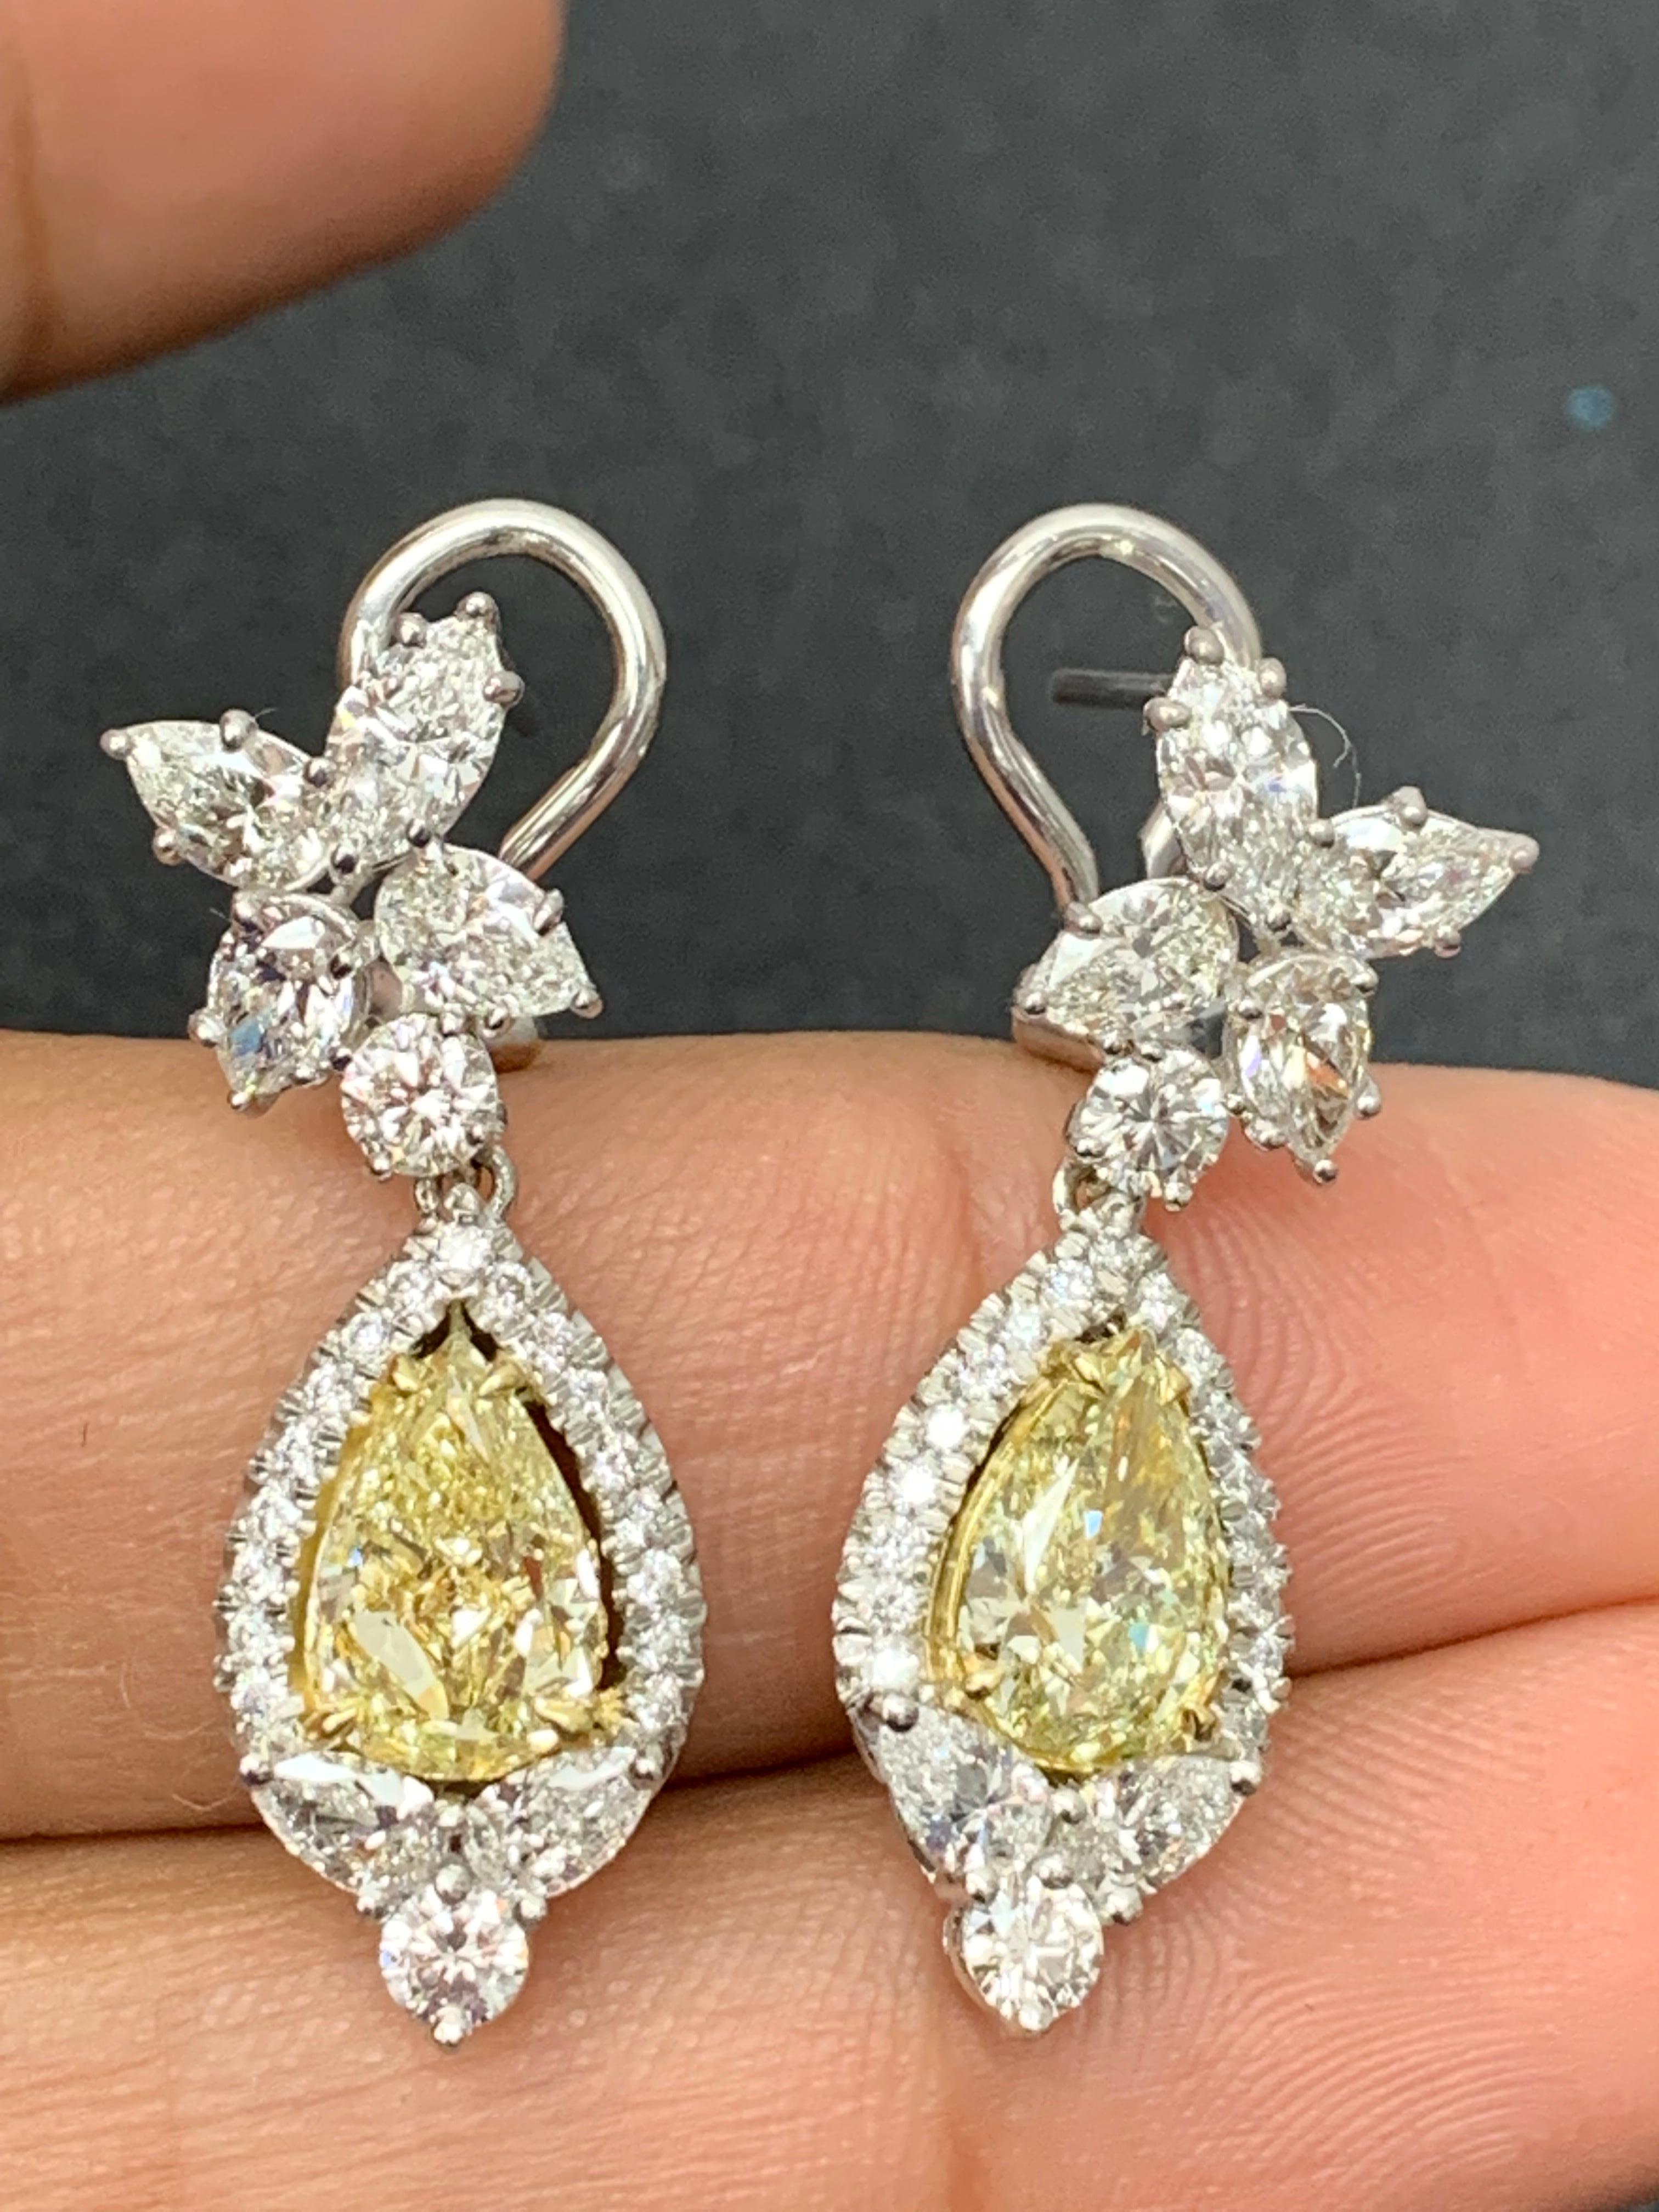 3.79 Carat Fancy Yellow Diamond and Diamond Drop Earrings in 18K White Gold For Sale 2